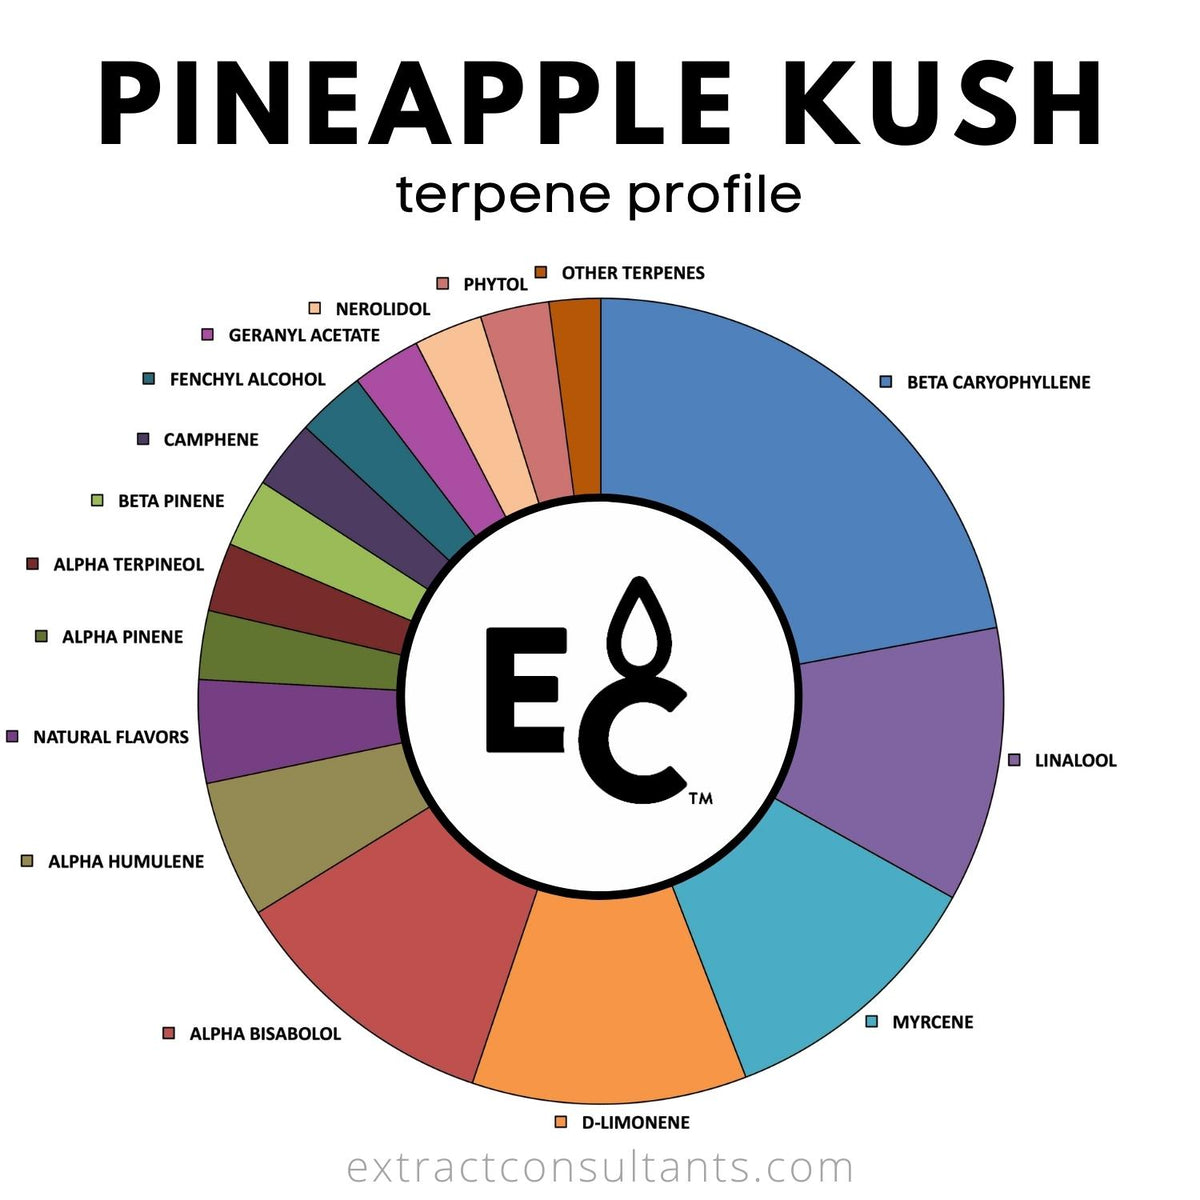 Pineapple Ice Terpenes (Solvent Free) // Extract Consultants